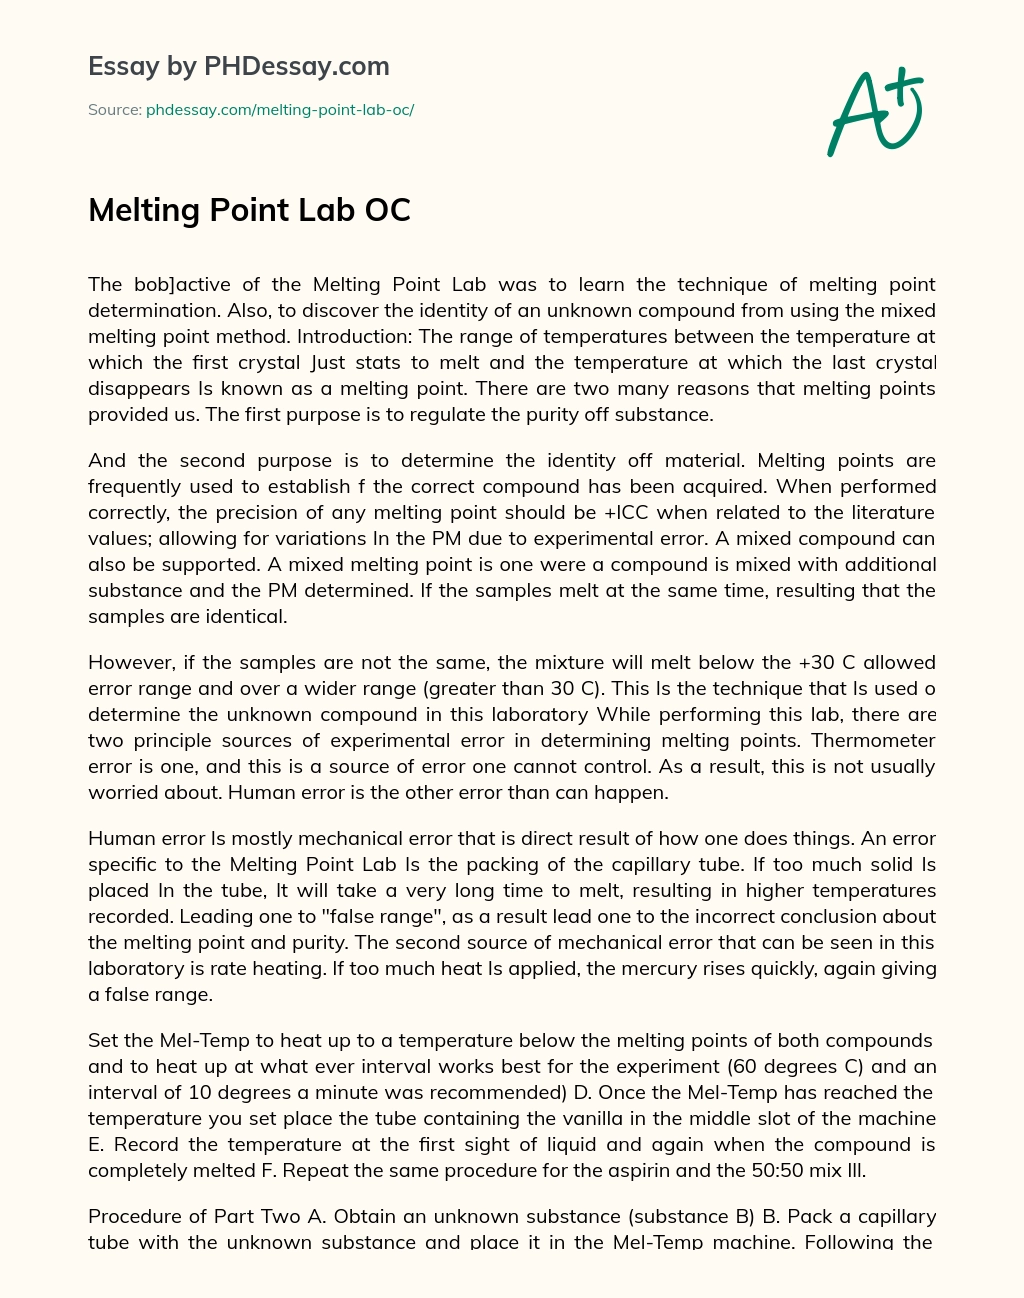 Melting Point Lab OC essay